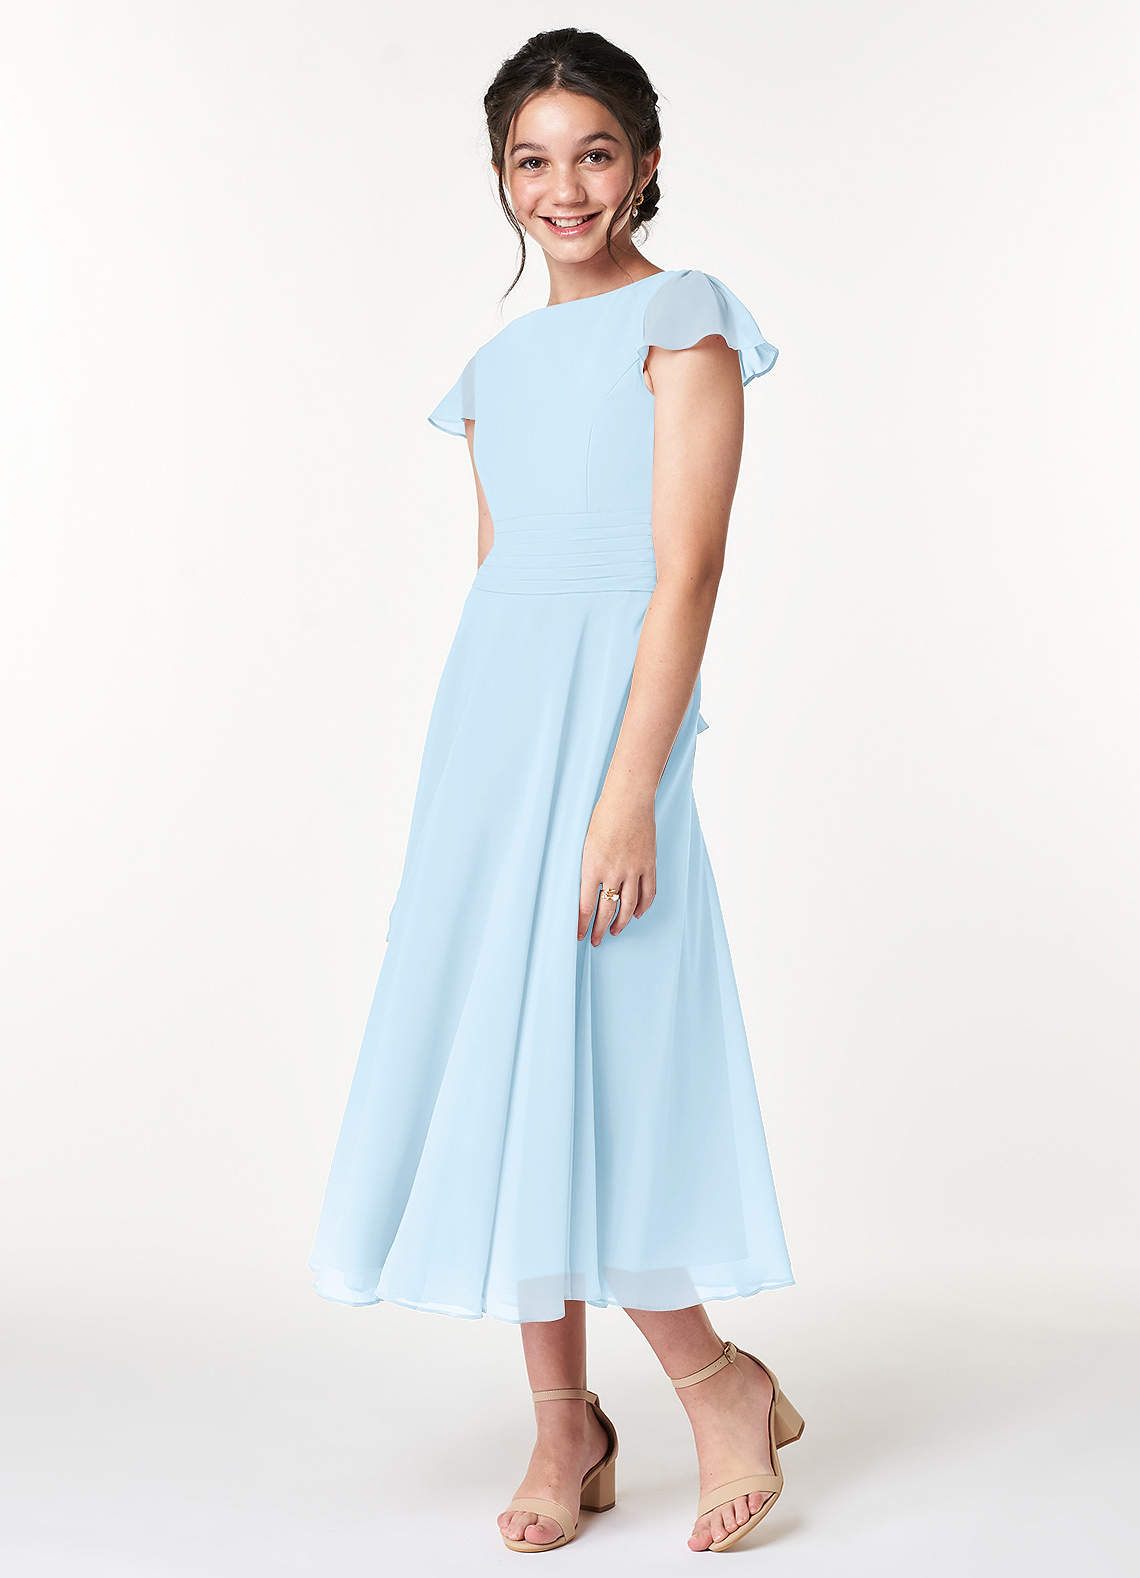 Azazie Payton A-Line Bow Chiffon Tea-Length Junior Bridesmaid Dress image1